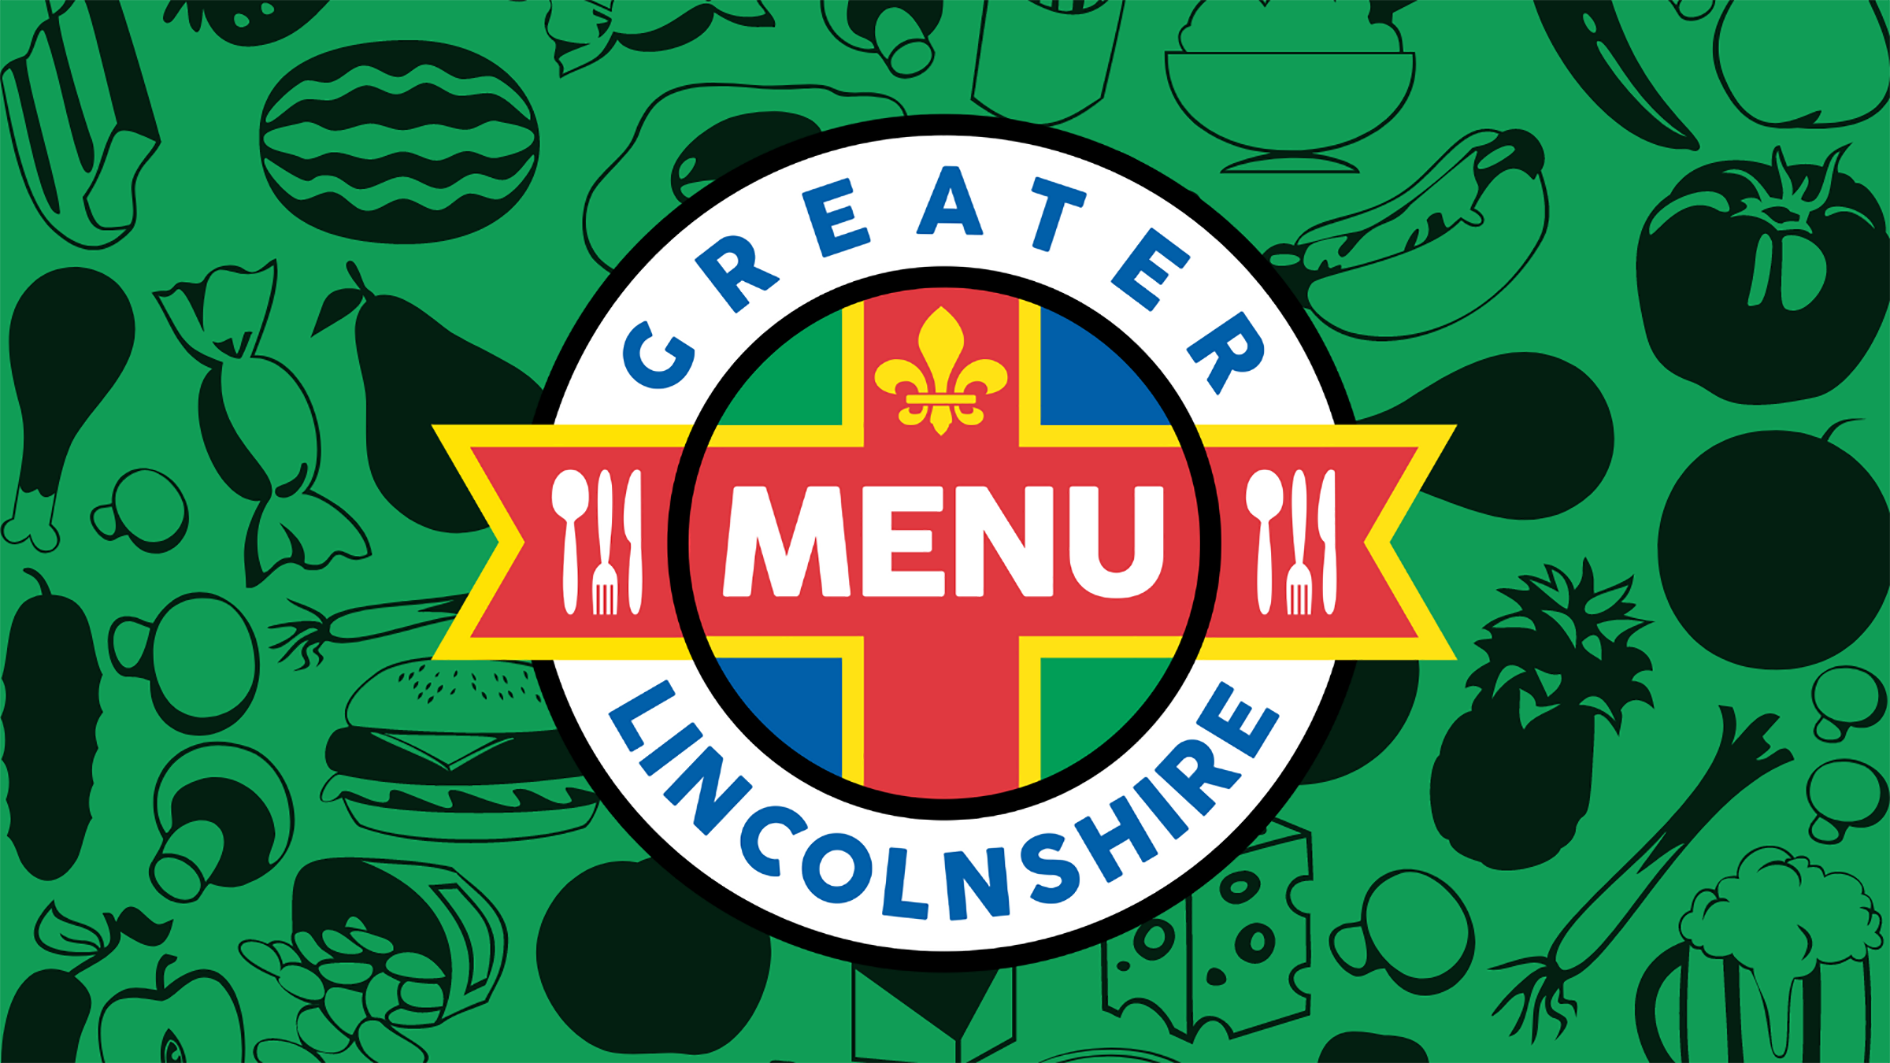 Greater Lincolnshire menu logo